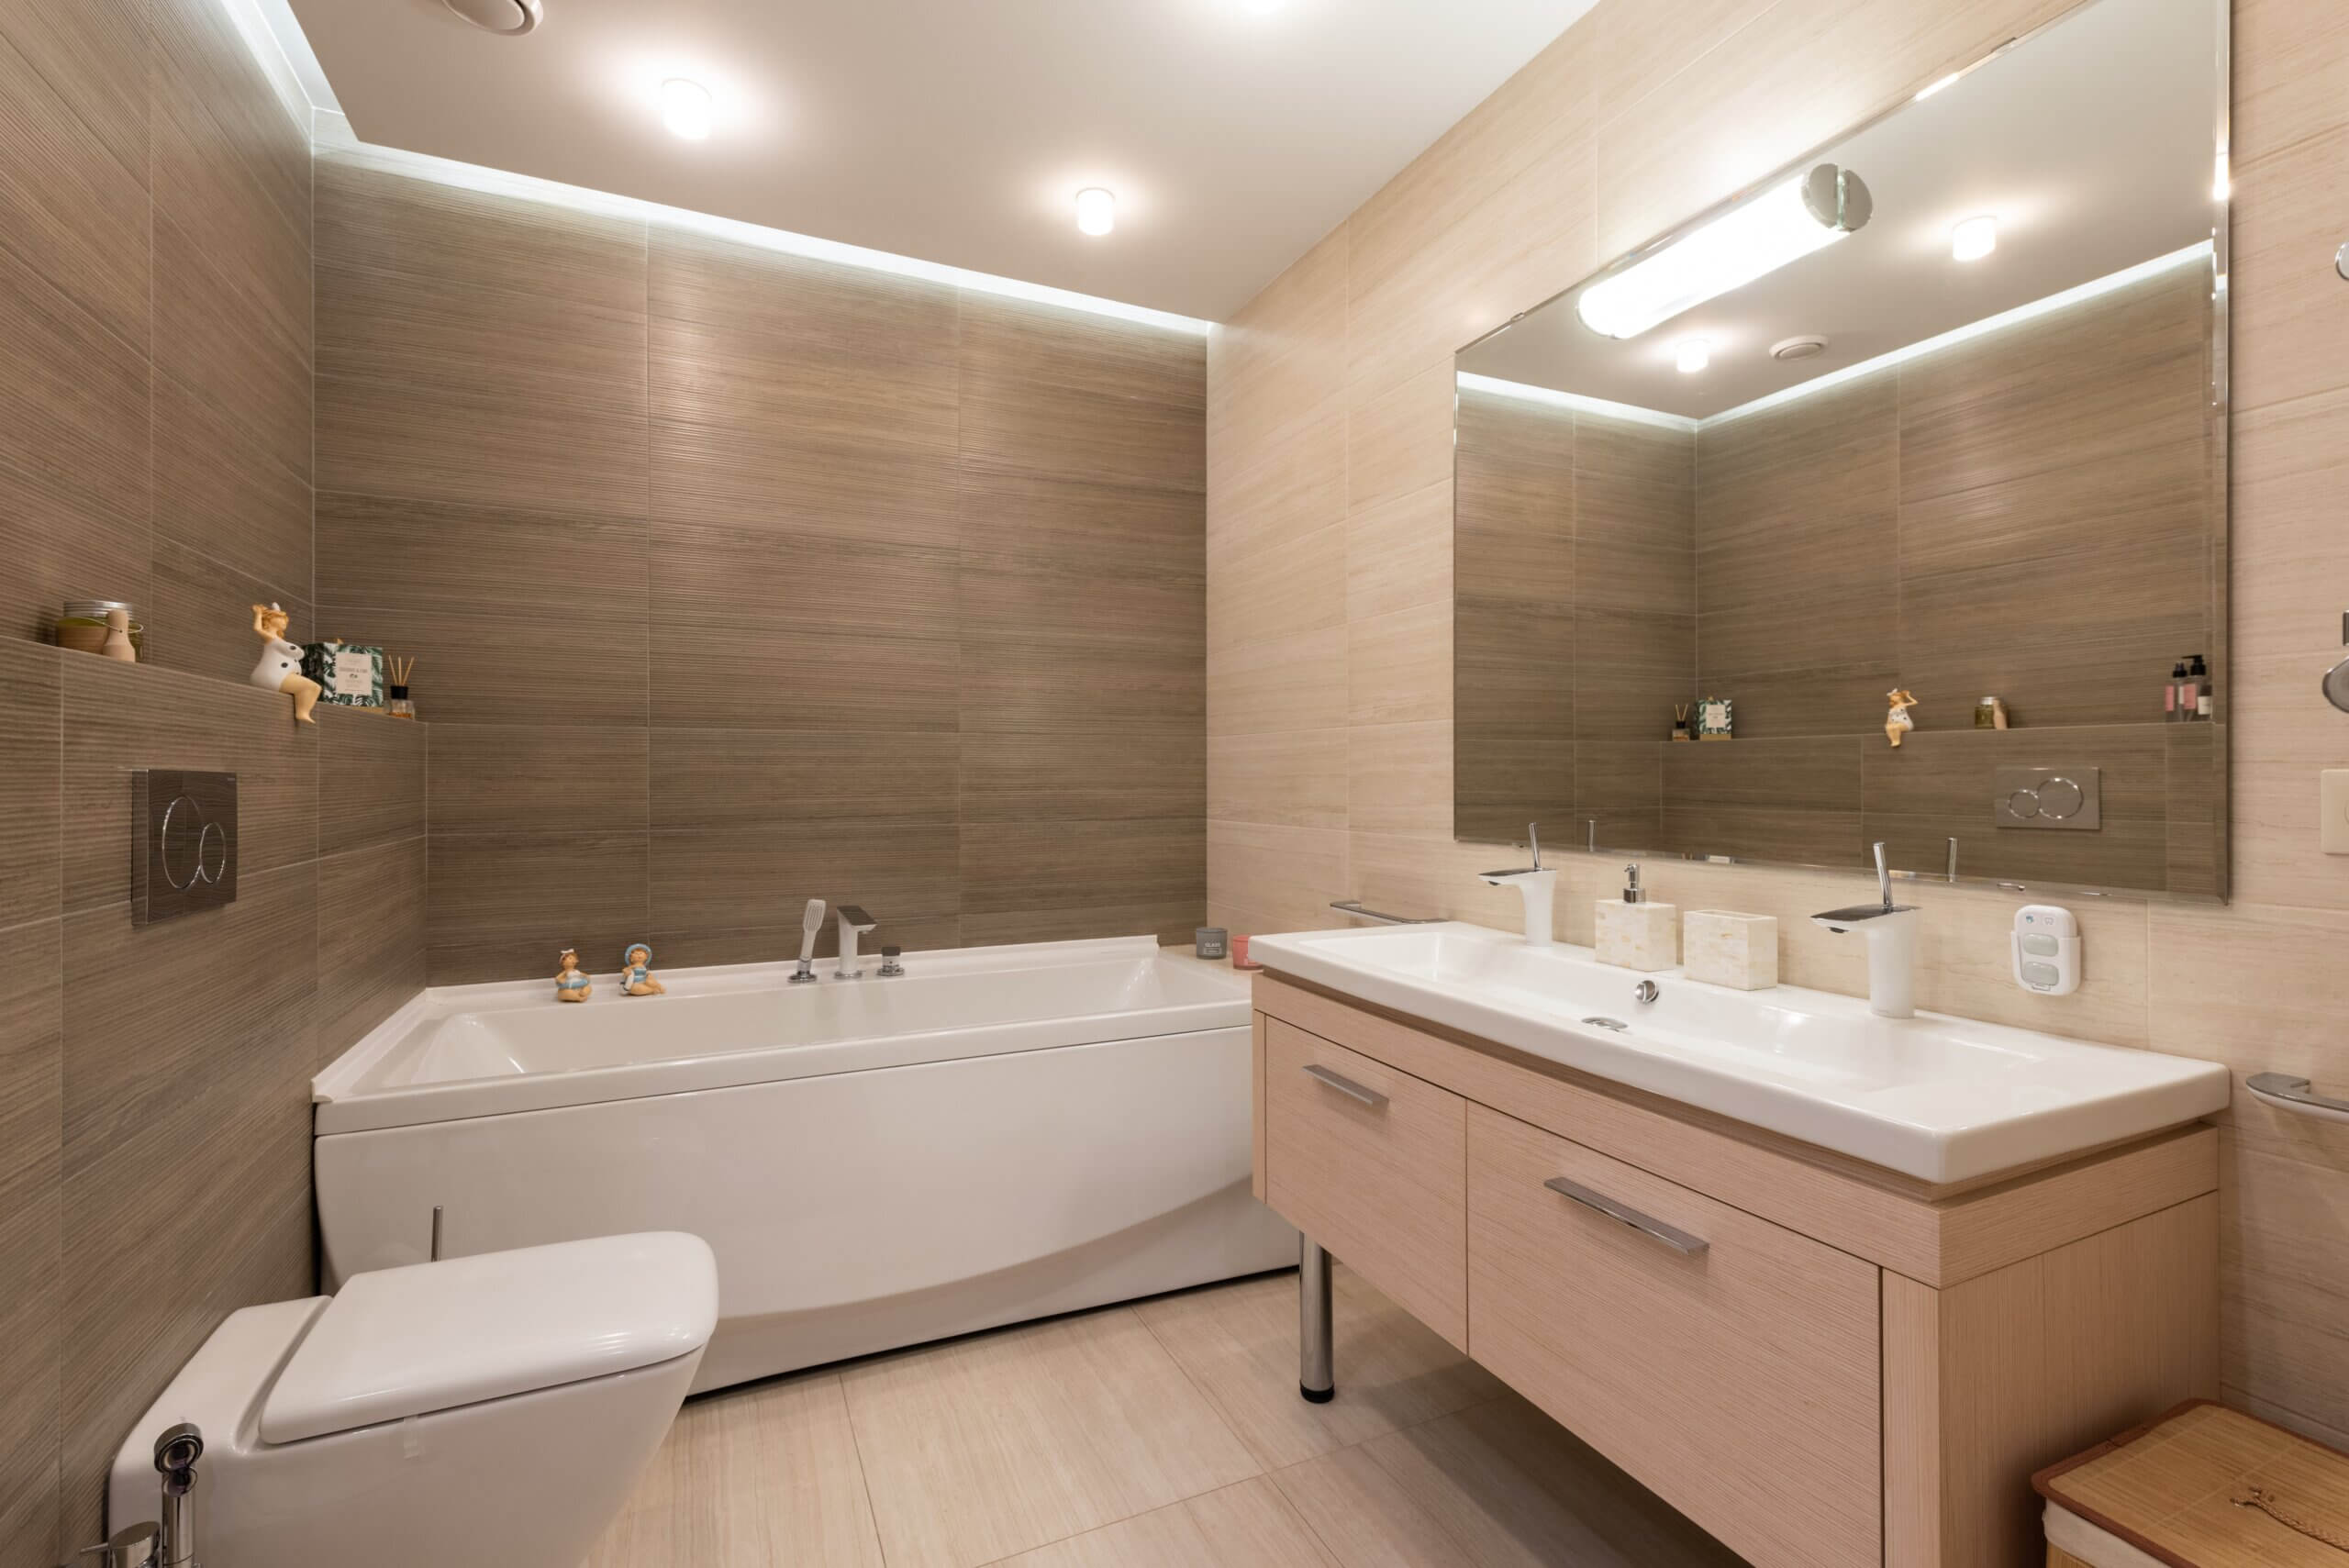 Elegant double bathroom vanity